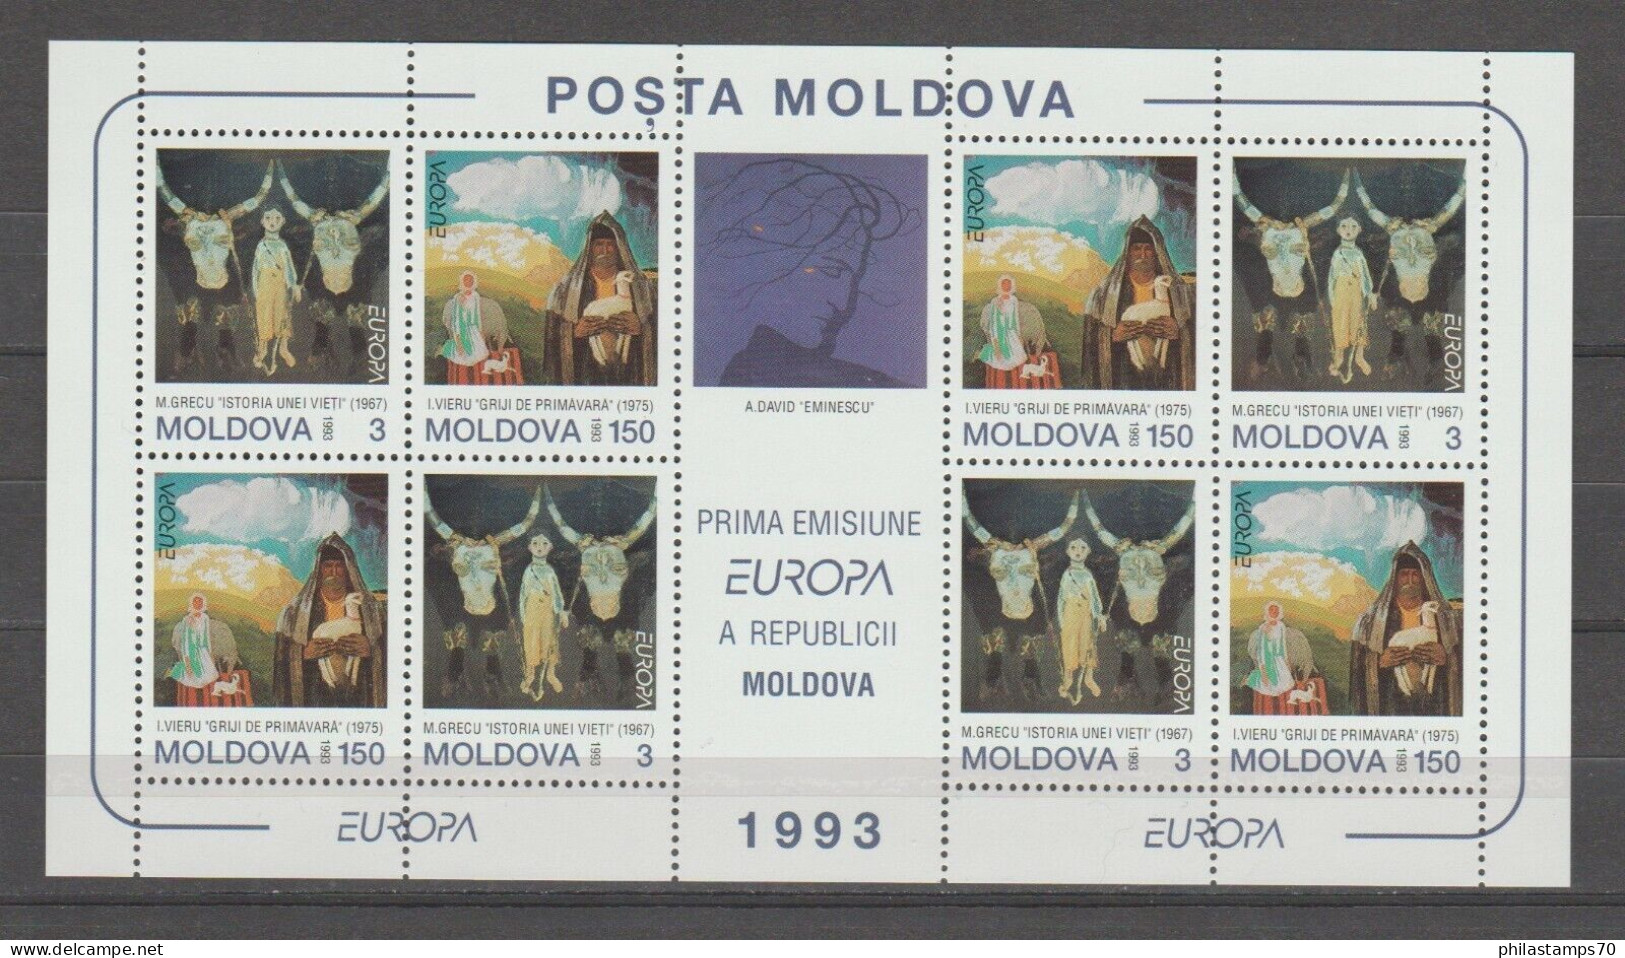 EUROPA CEPT 1993  MOLDAVIA   MINIFOGLI - SHEETS  SET COMPLETE MNH** - 1993